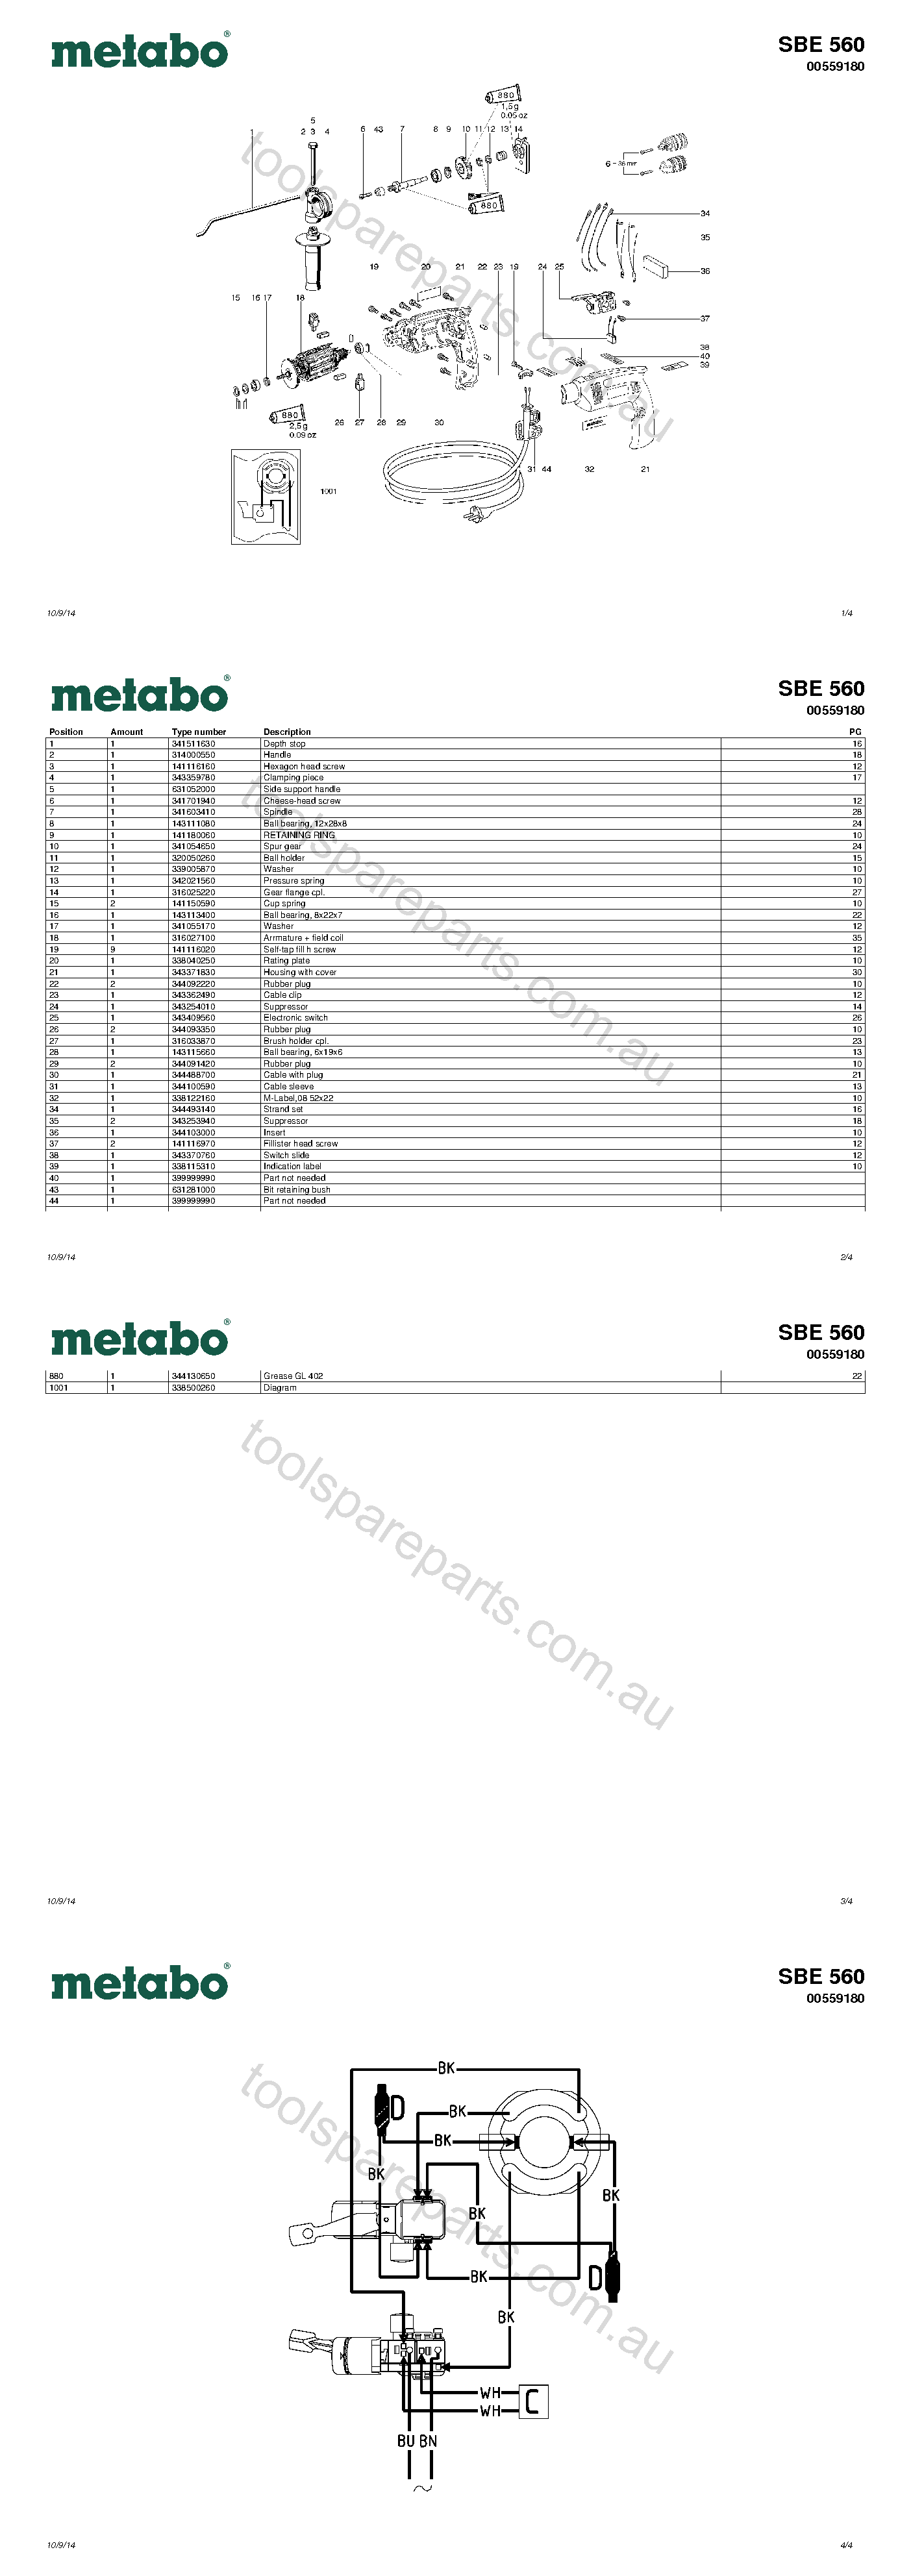 Metabo SBE 560 00559180  Diagram 1